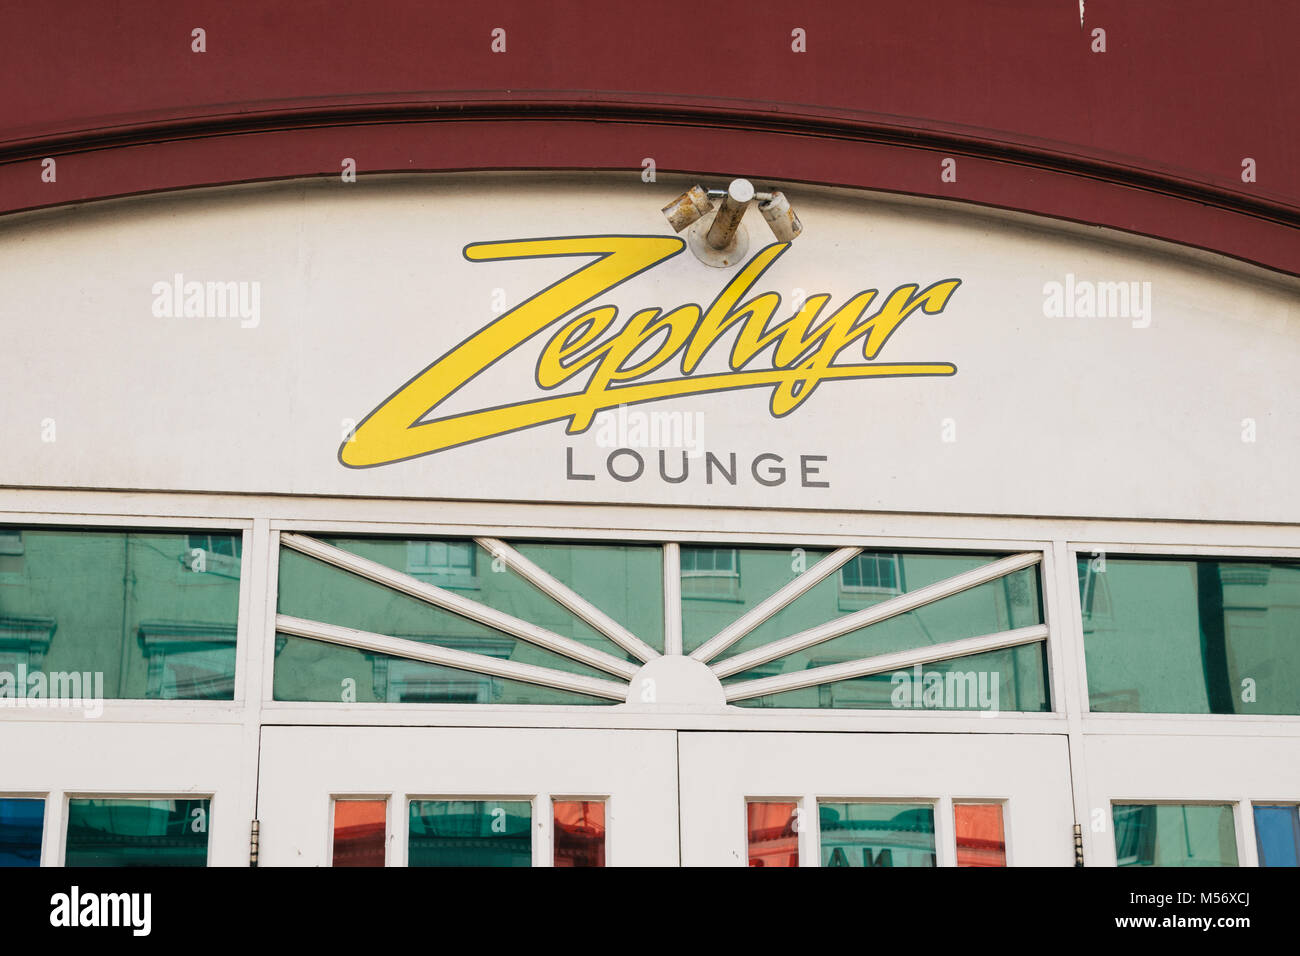 Zephyr Lounge sign, Leamington Spa, Warwickshire, UK. Live music venue. Stock Photo